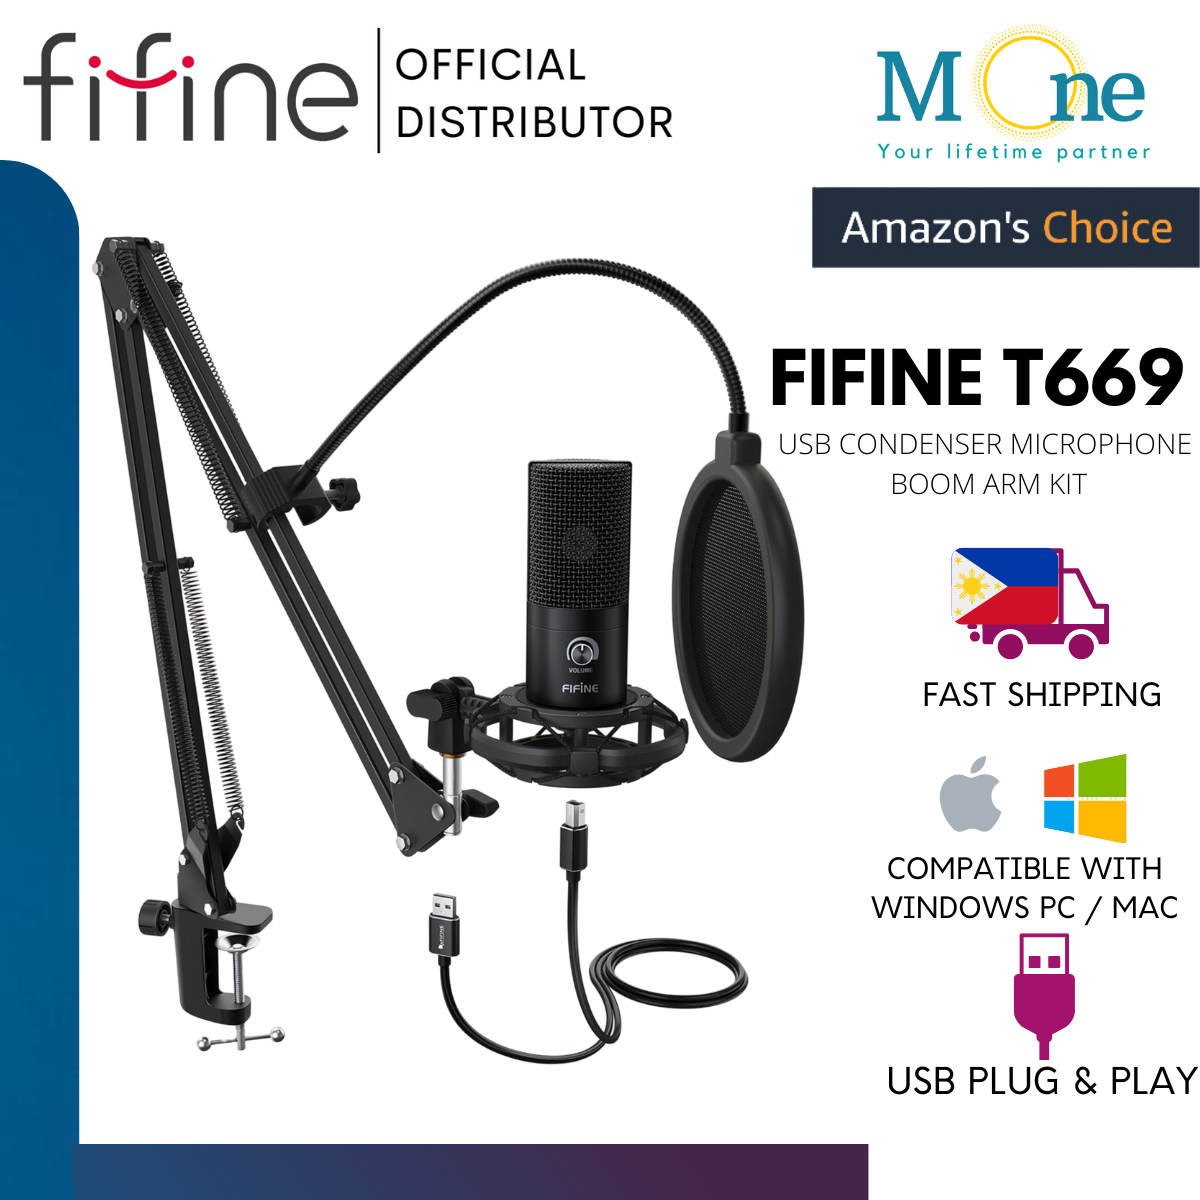 Fifine T669 Professional Studio Cardioid Condenser USB Microphone